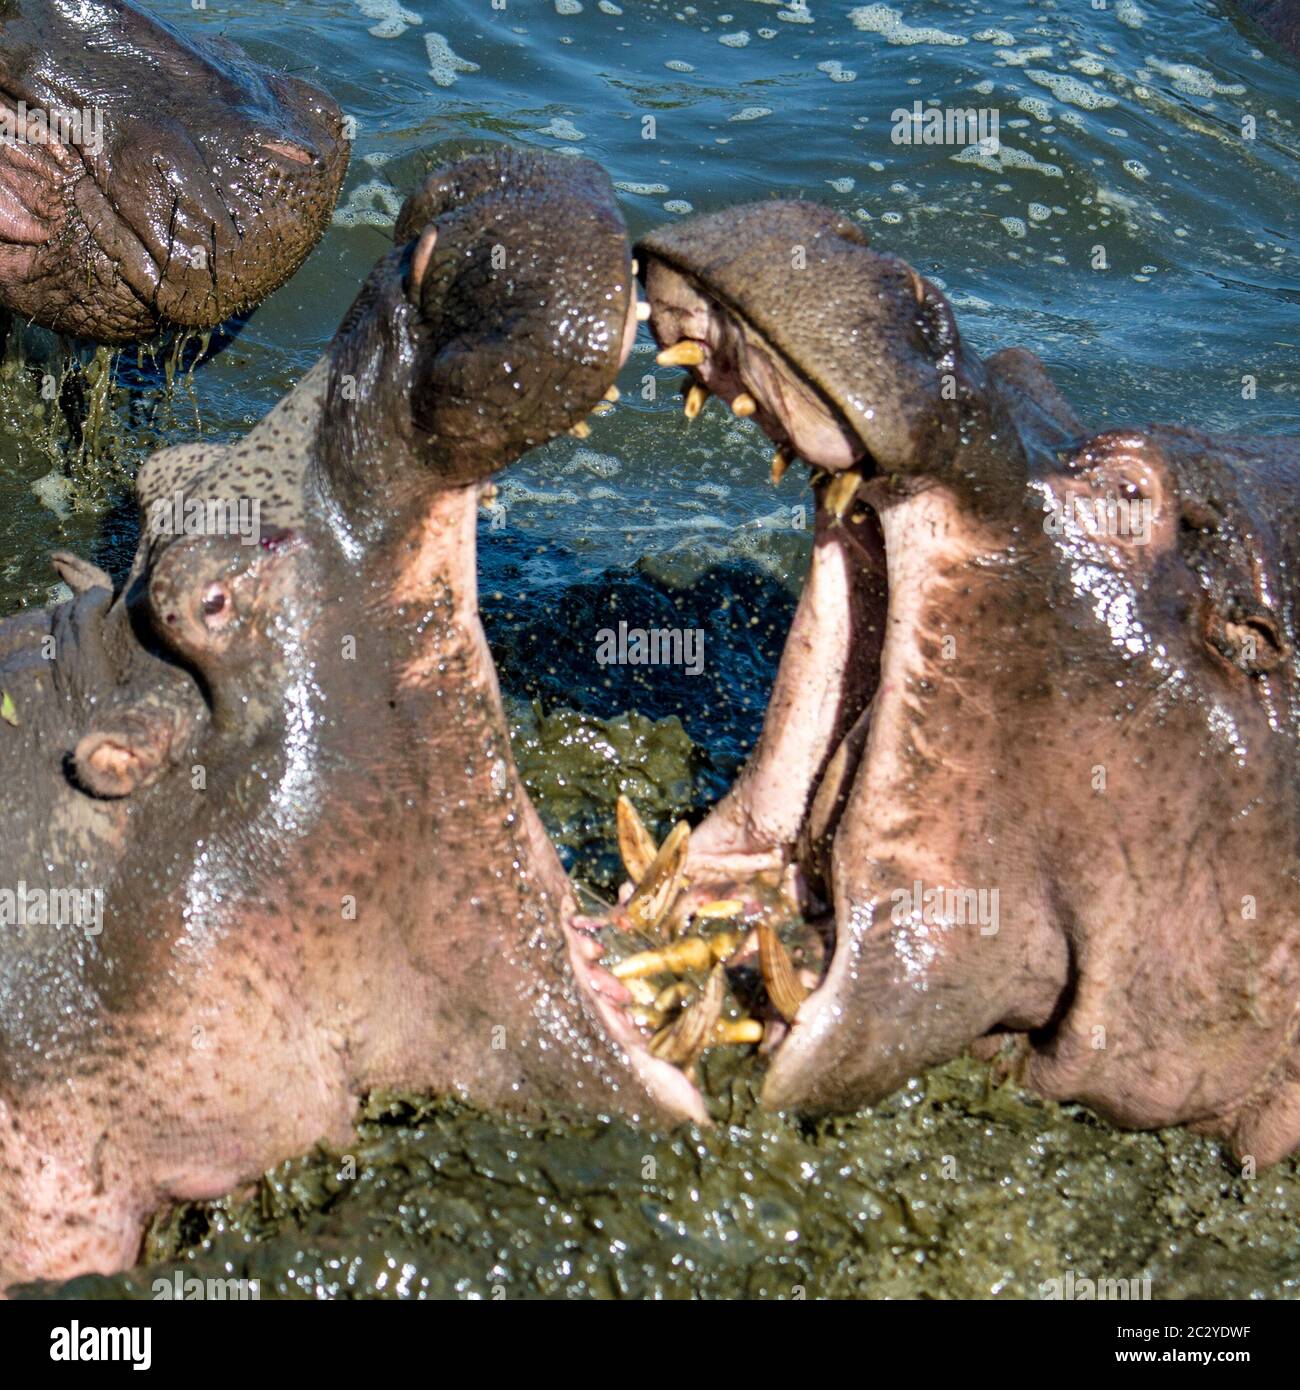 Common hippopotamus (Hippopotamus amphibius) confrontation, Serengeti National Park, Tanzania, Africa Stock Photo